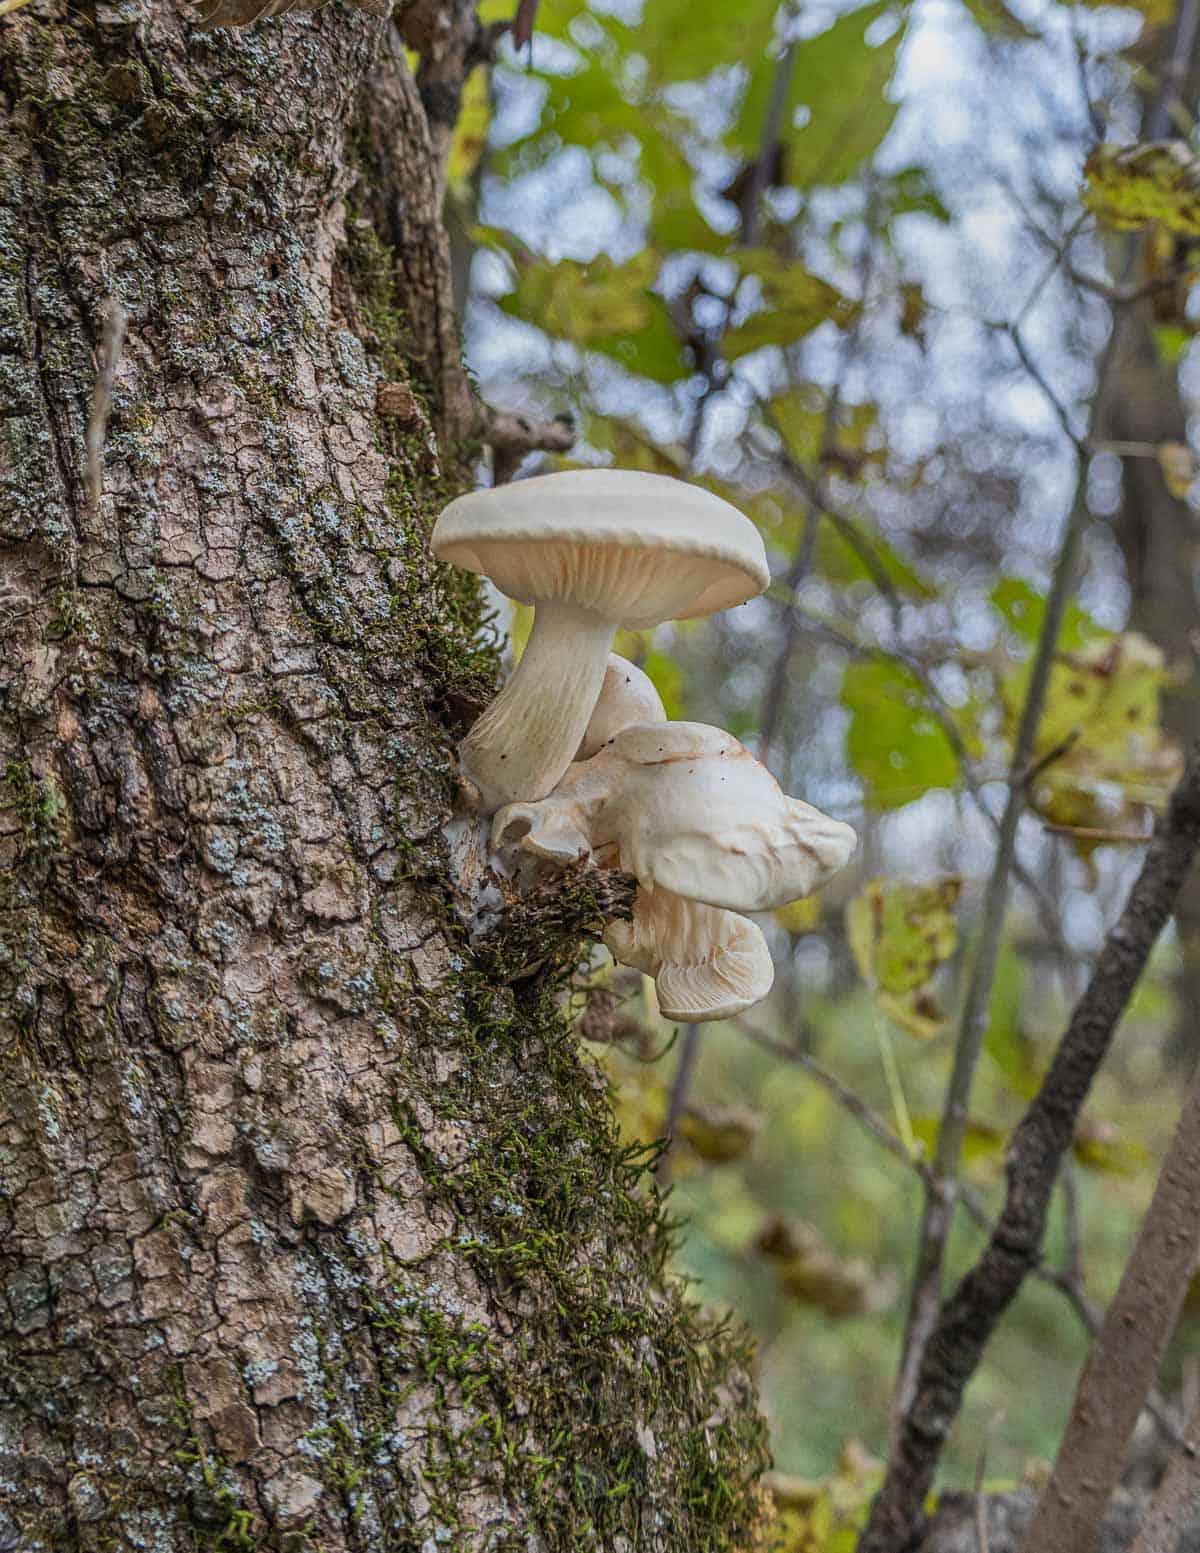 Hysizygus ulmarius, the elm oyster mushroom growing on an elm tree.